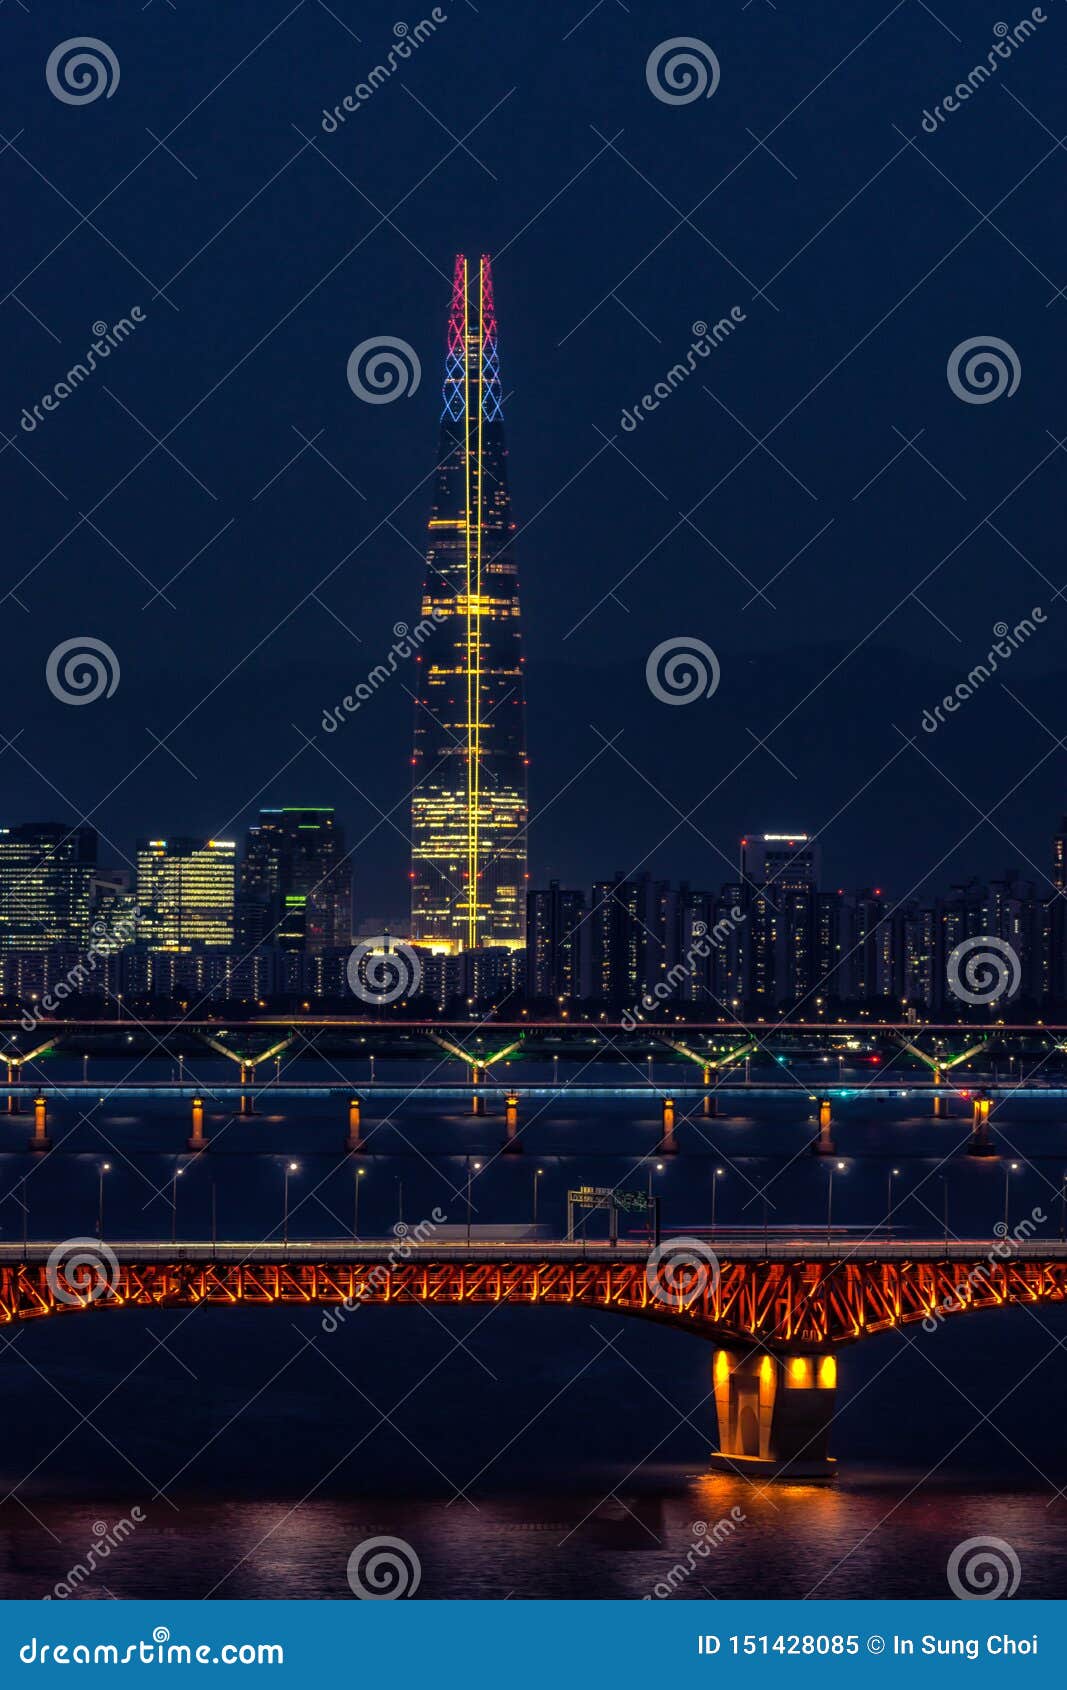 lotte tower and seongsu bridge